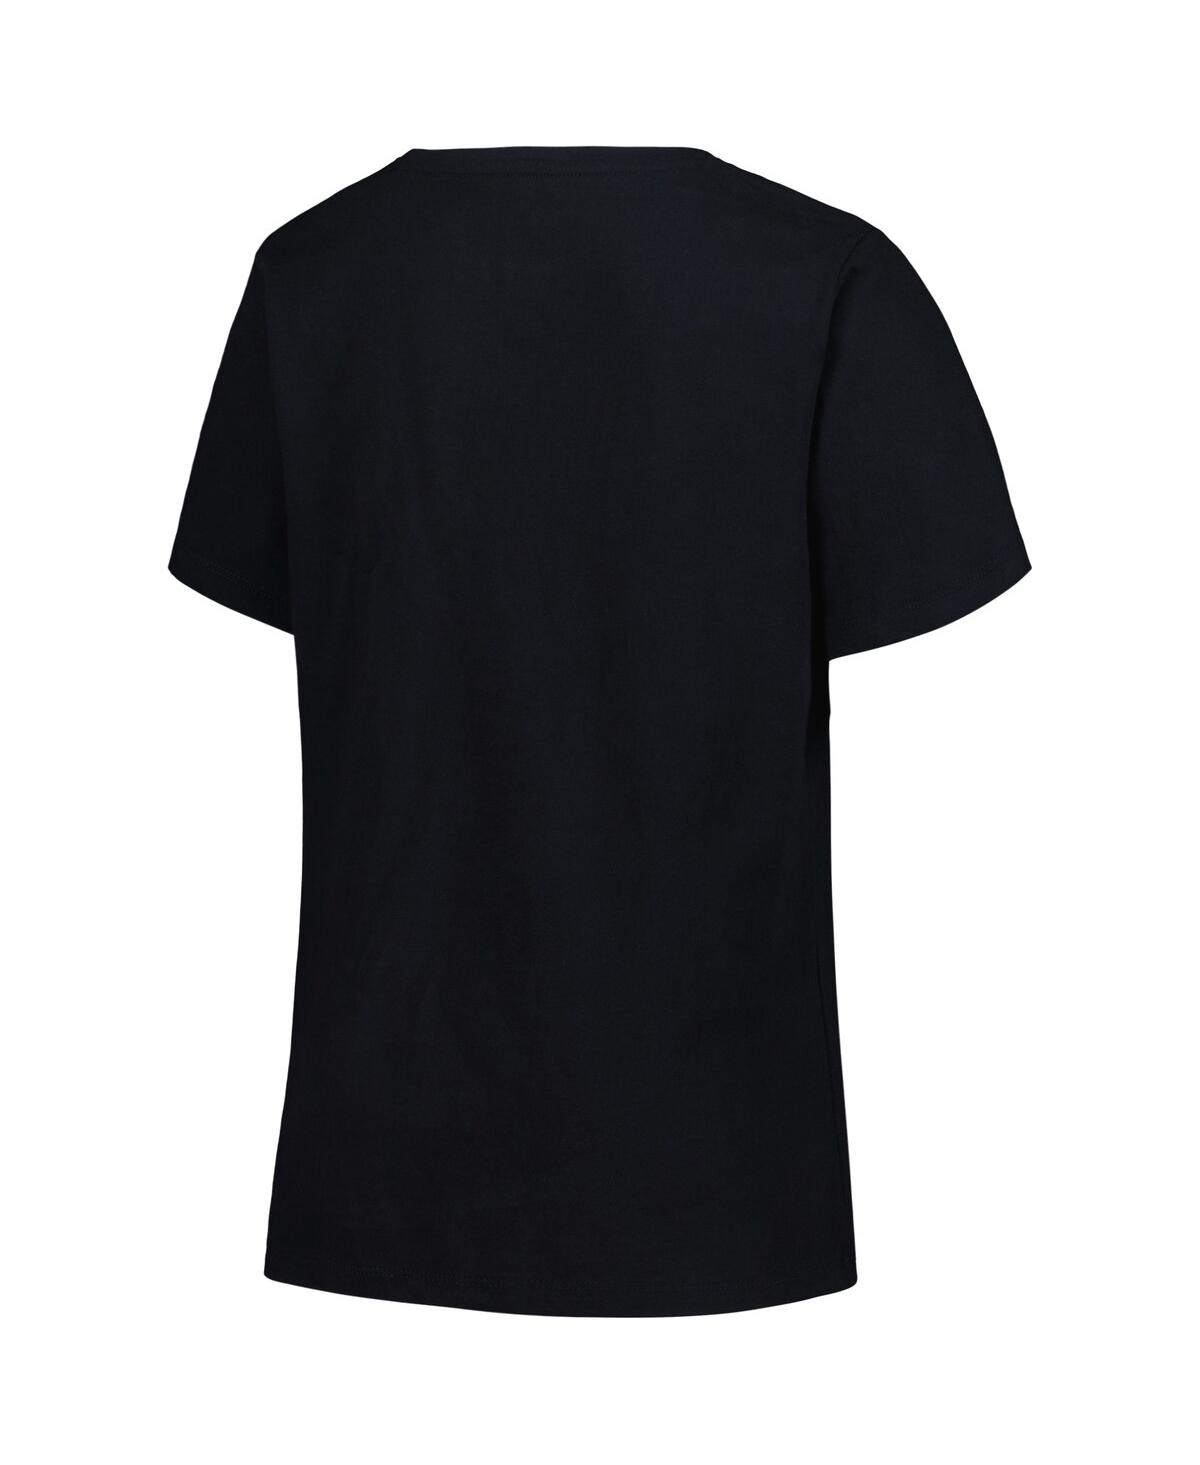 Shop Profile Women's  Black Orlando Magic Plus Size Arch Over Logo V-neck T-shirt